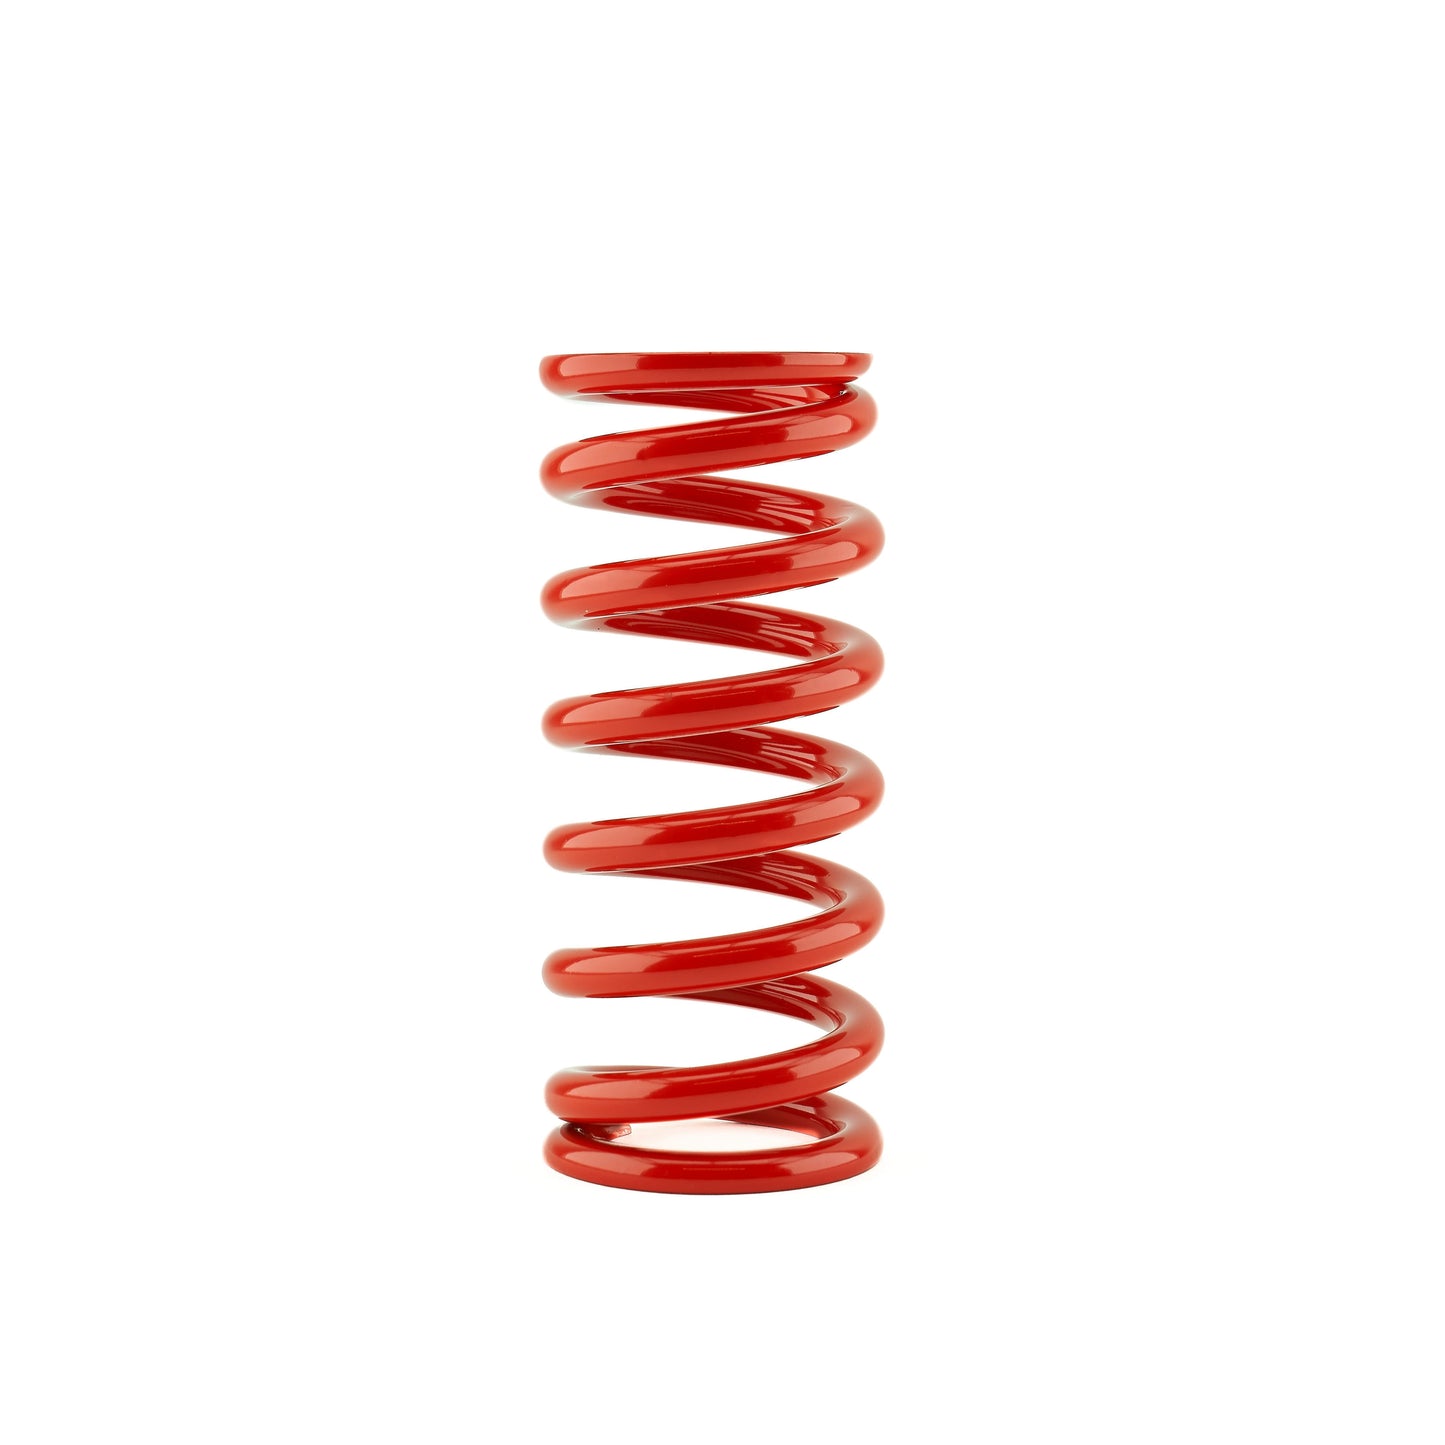 K-TECH SHOCK ABSORBER SPRING - 52/57X175 RANGE - RED - (5257-175-100)